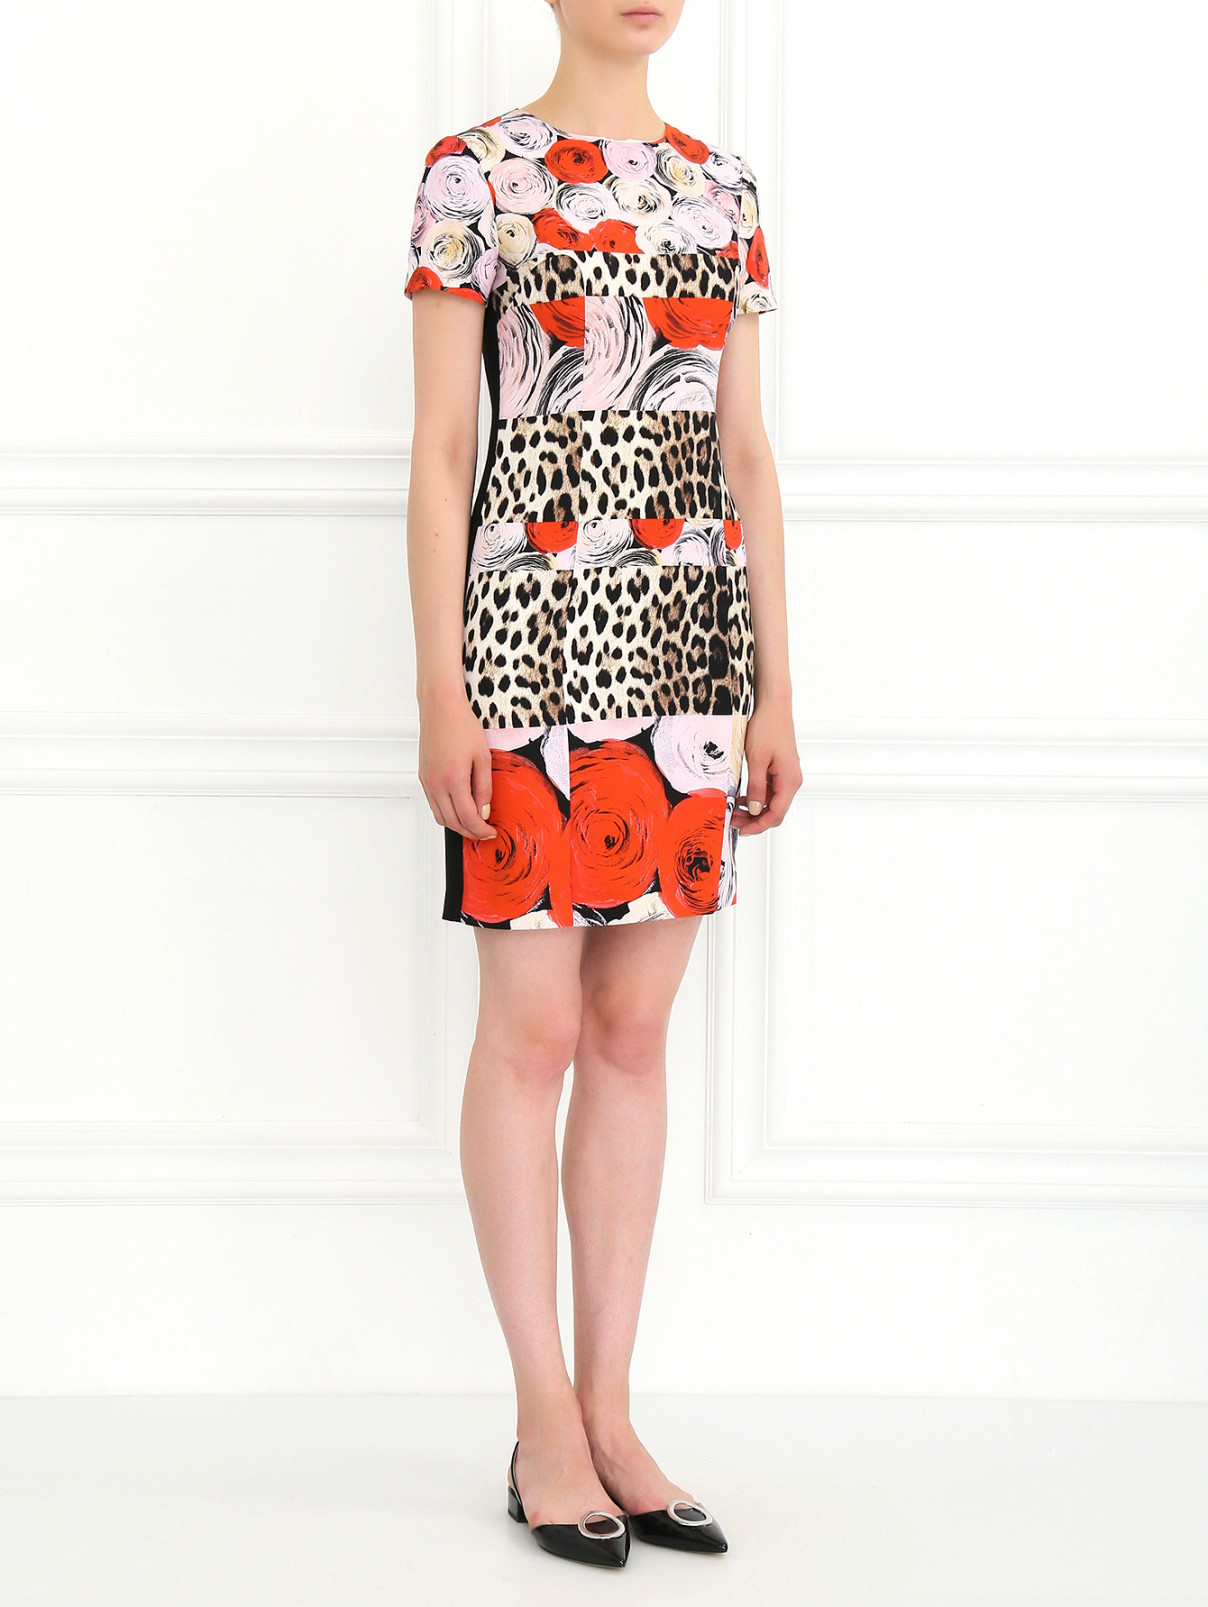 Платье с узором Moschino Cheap&Chic  –  Модель Общий вид  – Цвет:  Узор